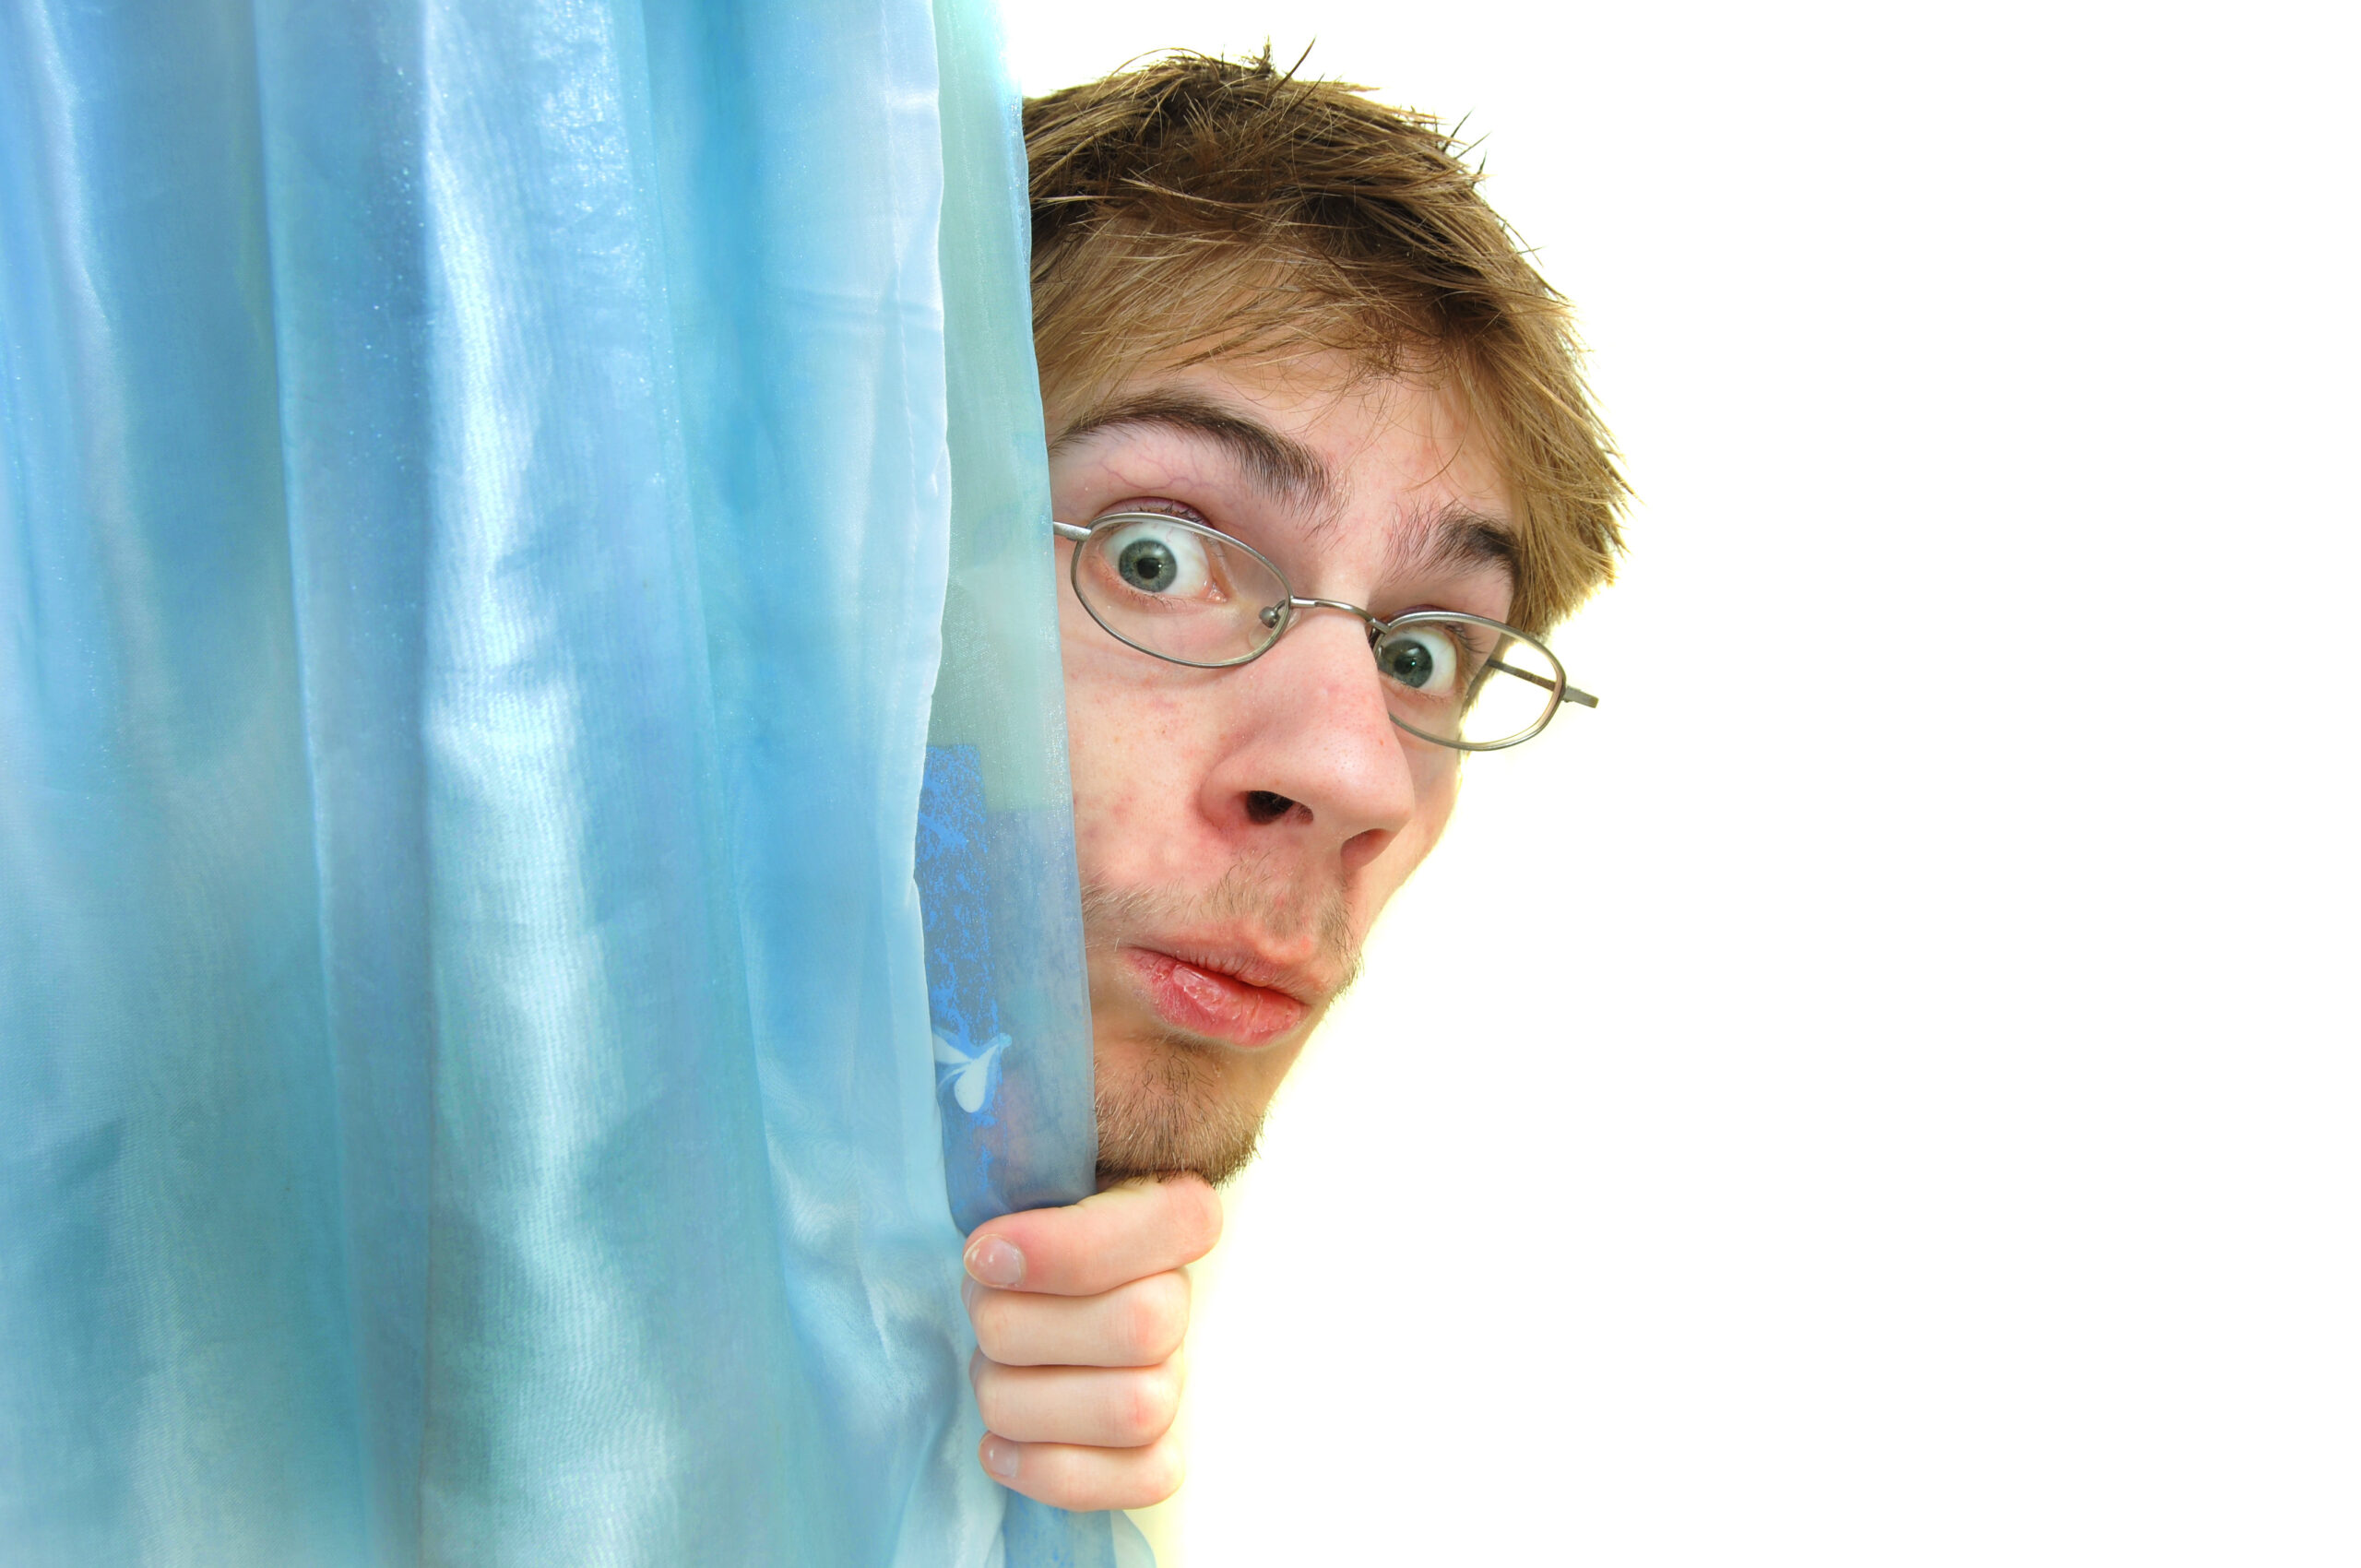 Peeking behind curtain